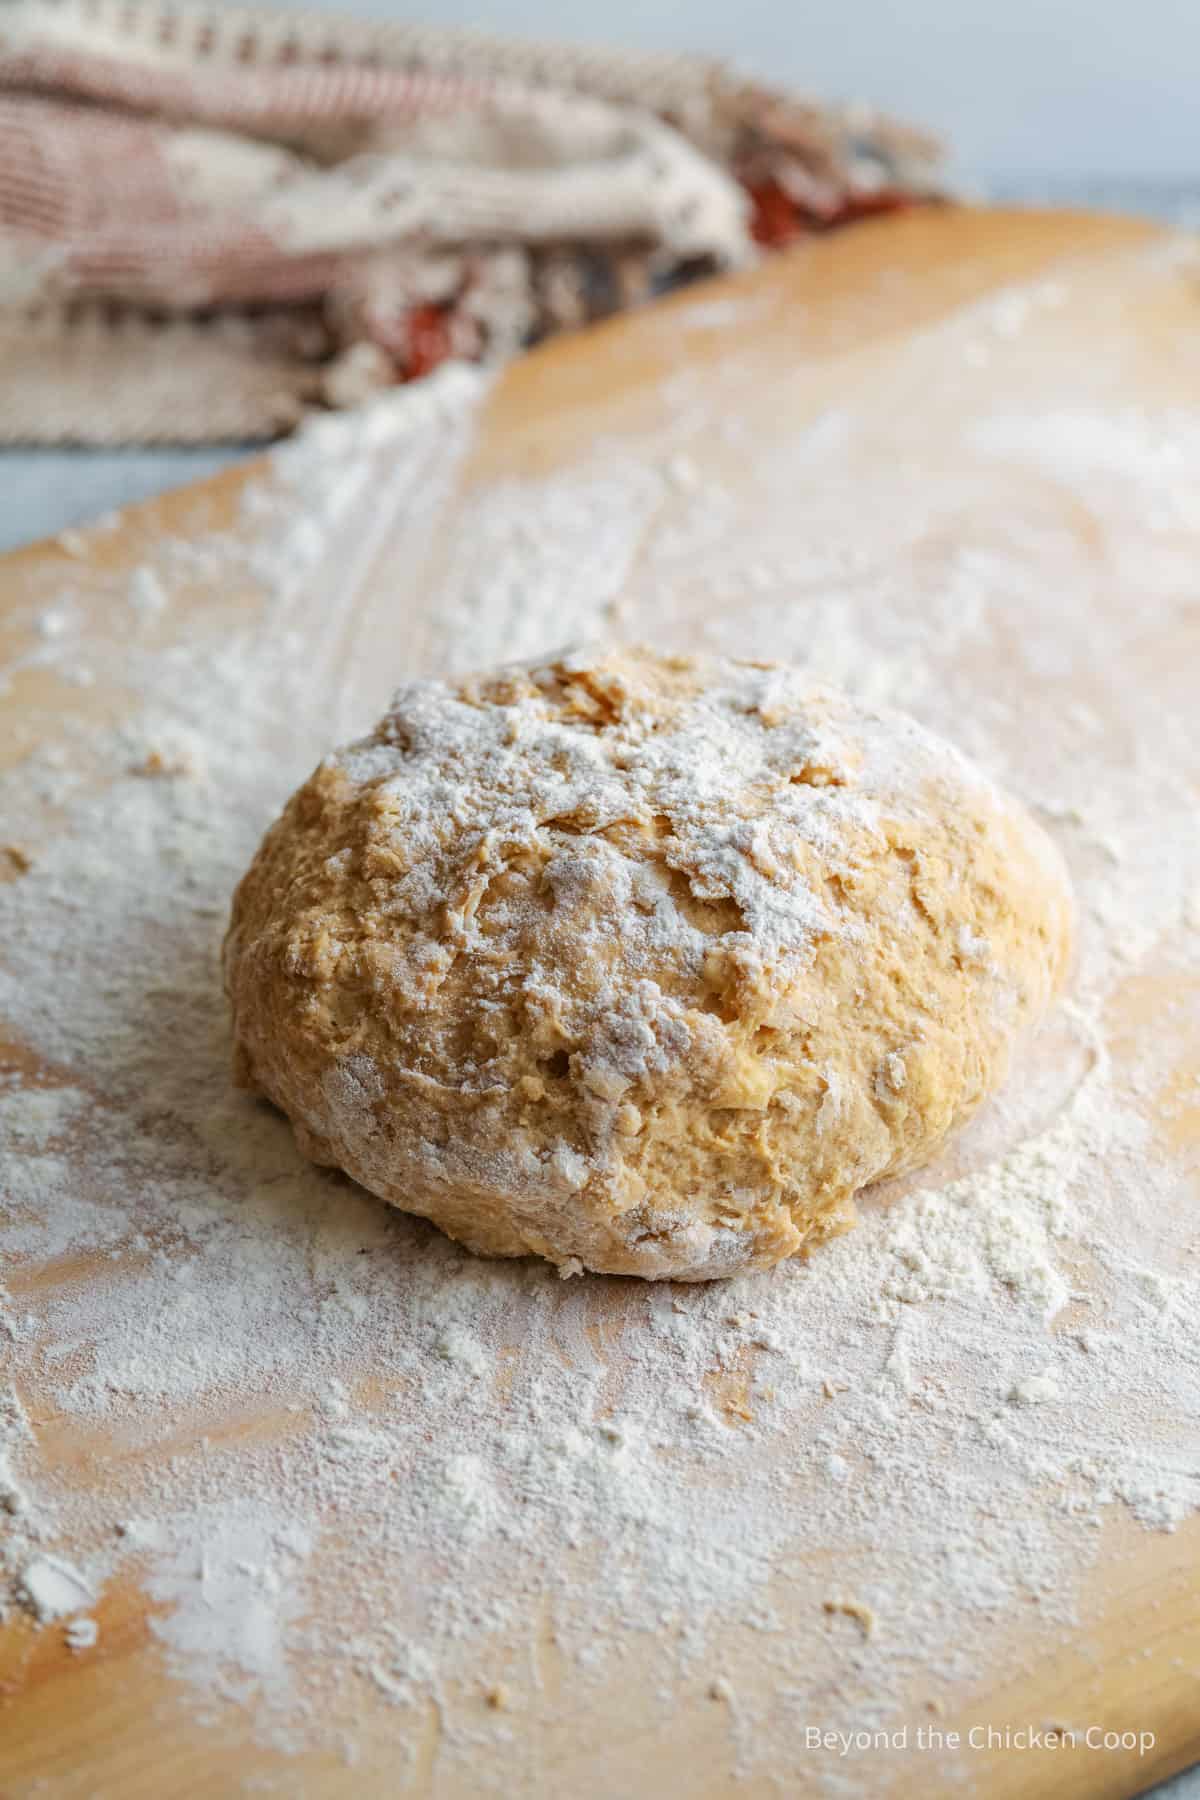 A ball of dough on a floured board.